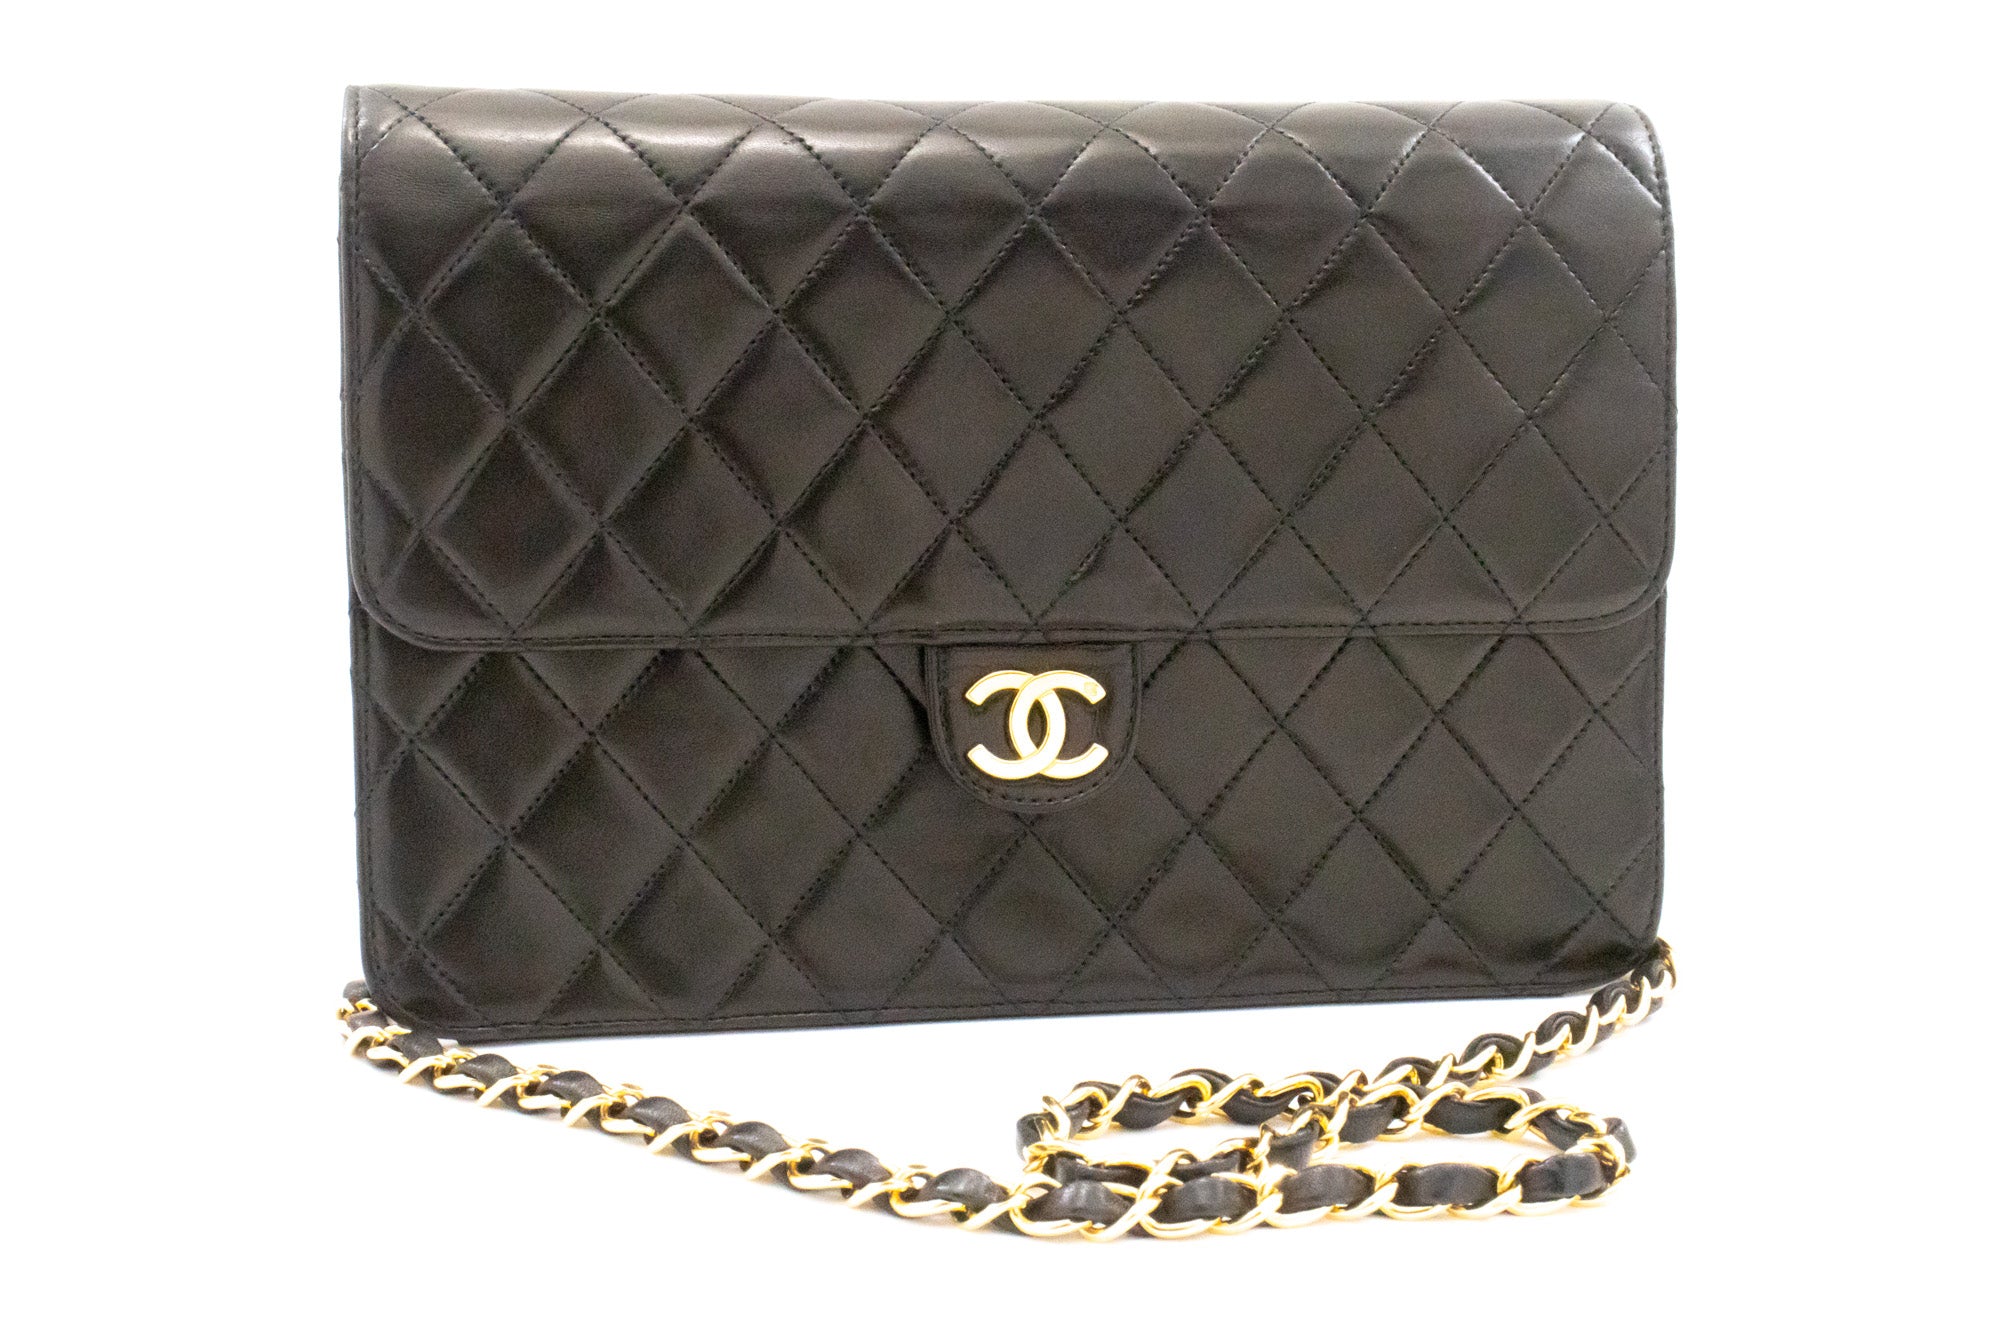 Chanel Classic Large 11 Chain Shoulder Bag Flap Black Lambskin J42